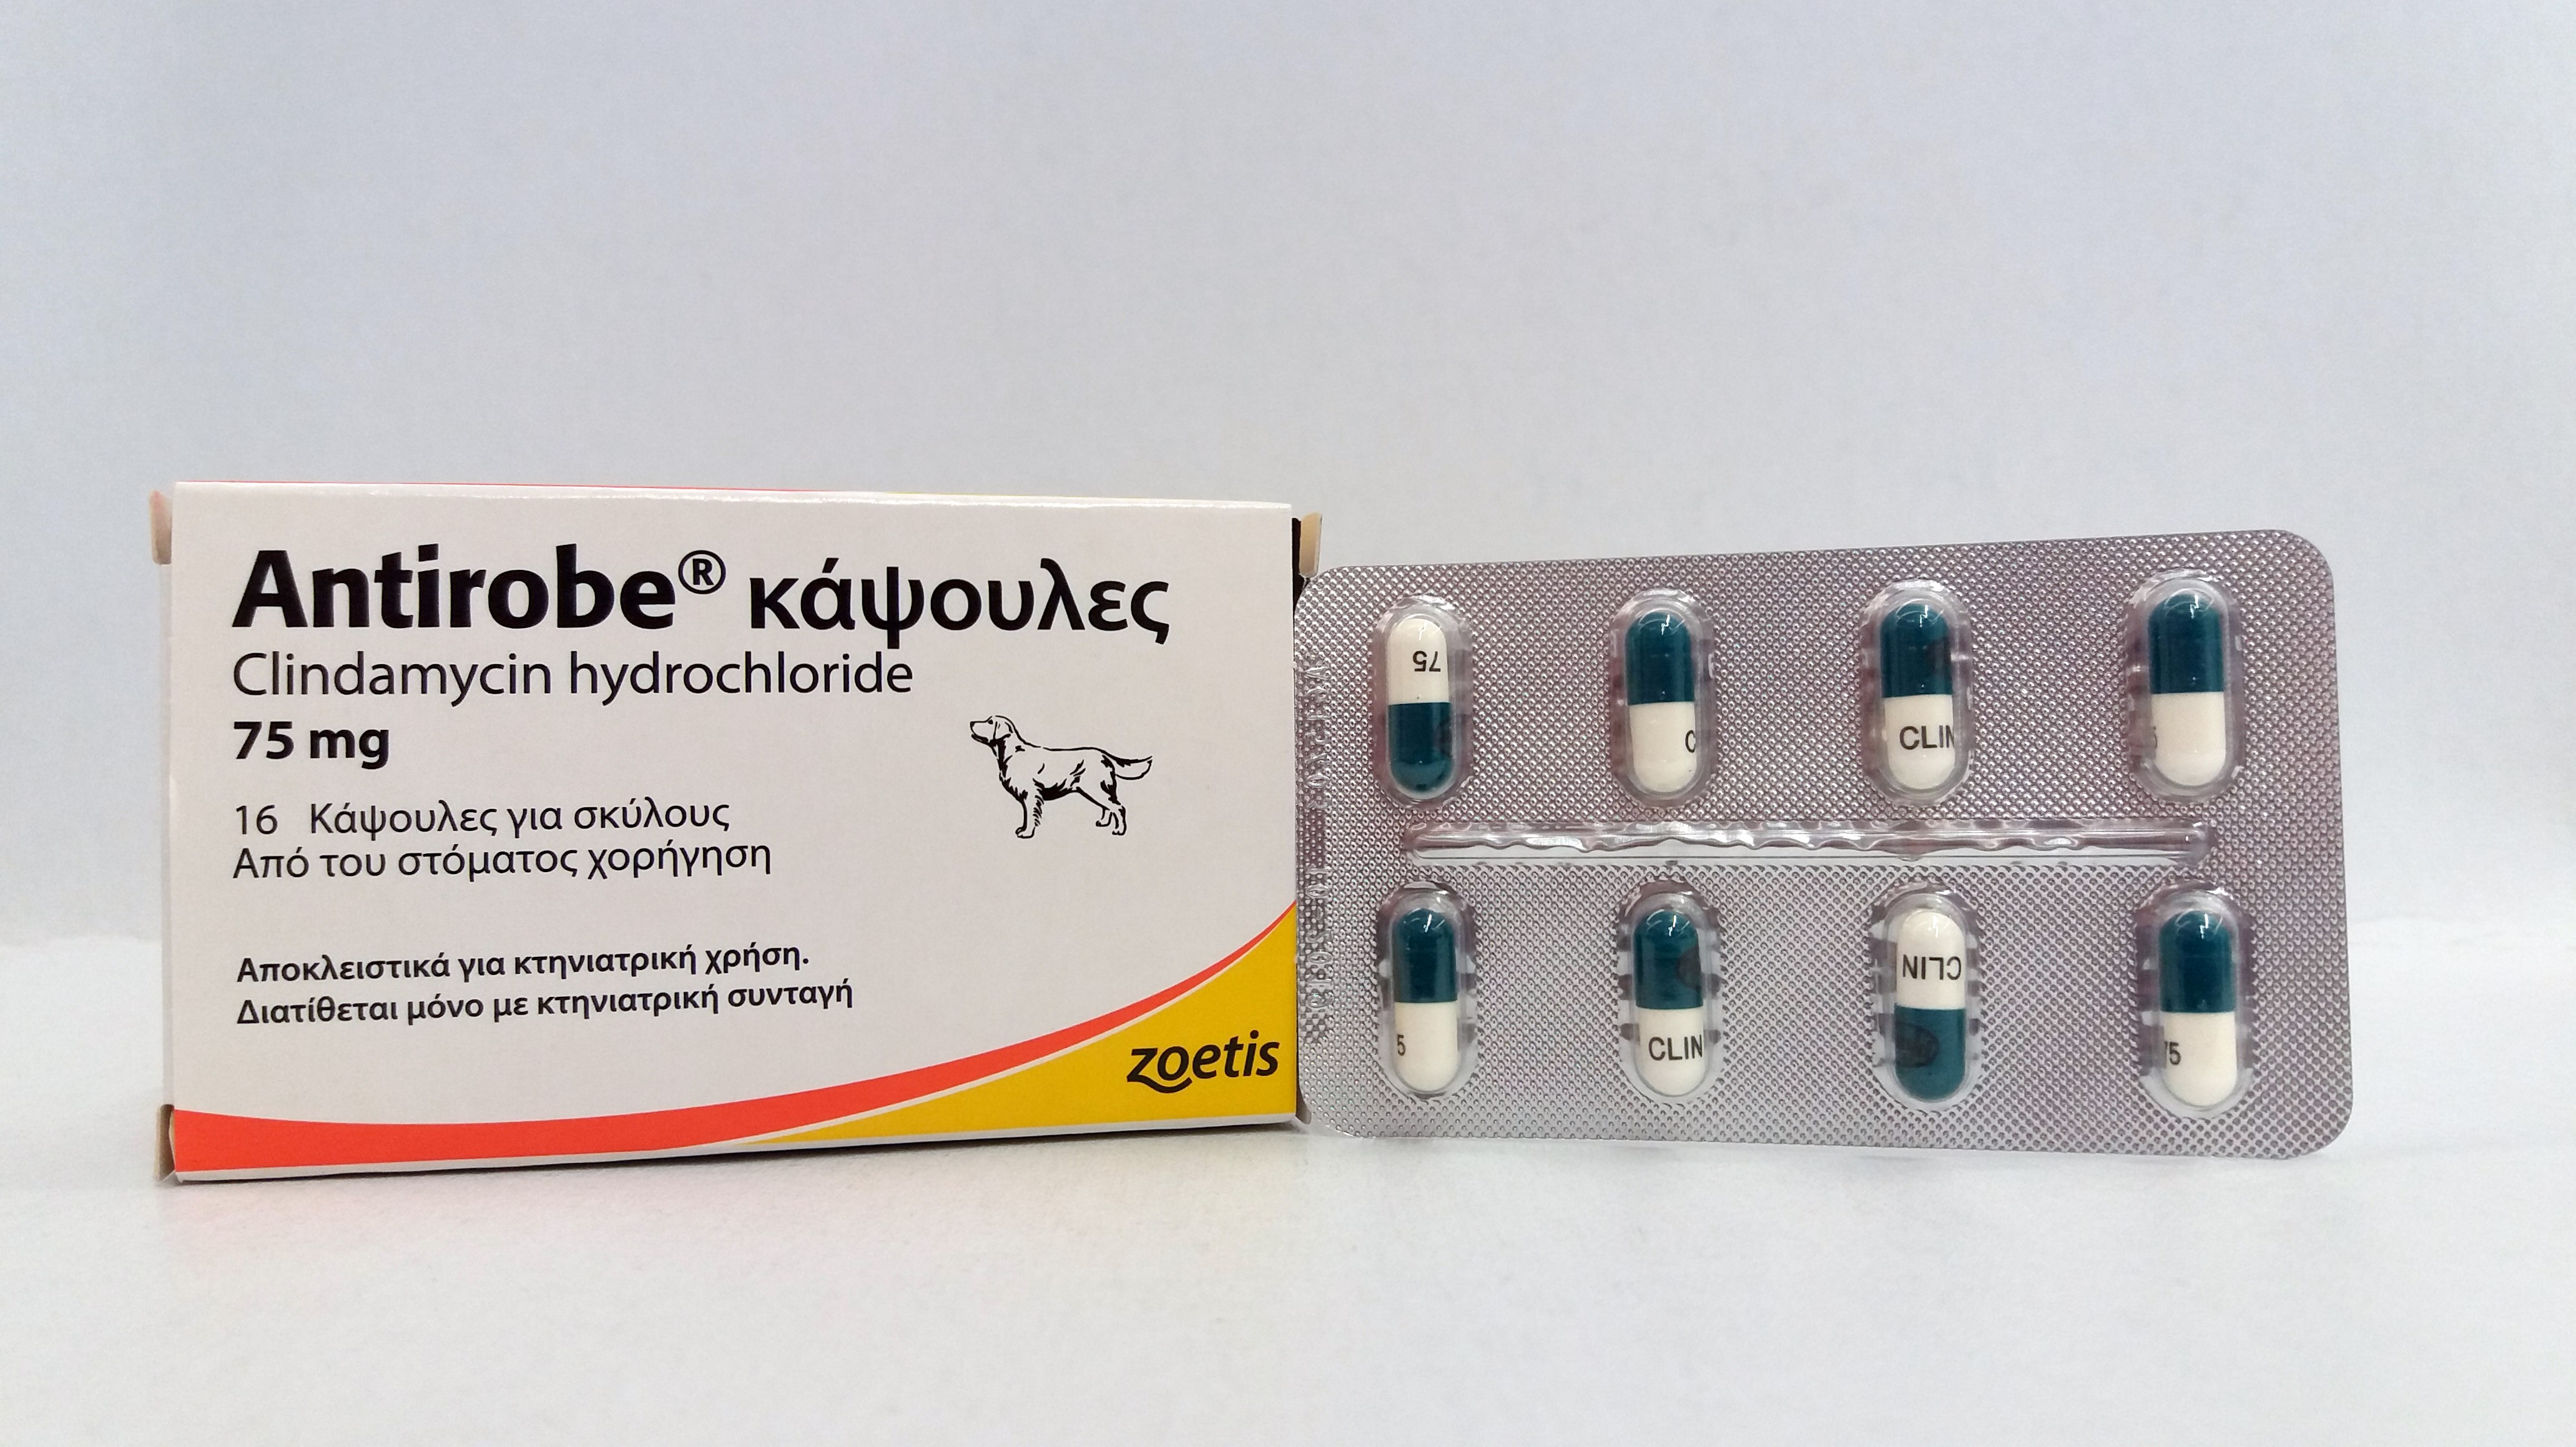 Antirobe 75 mg, 16 tabs